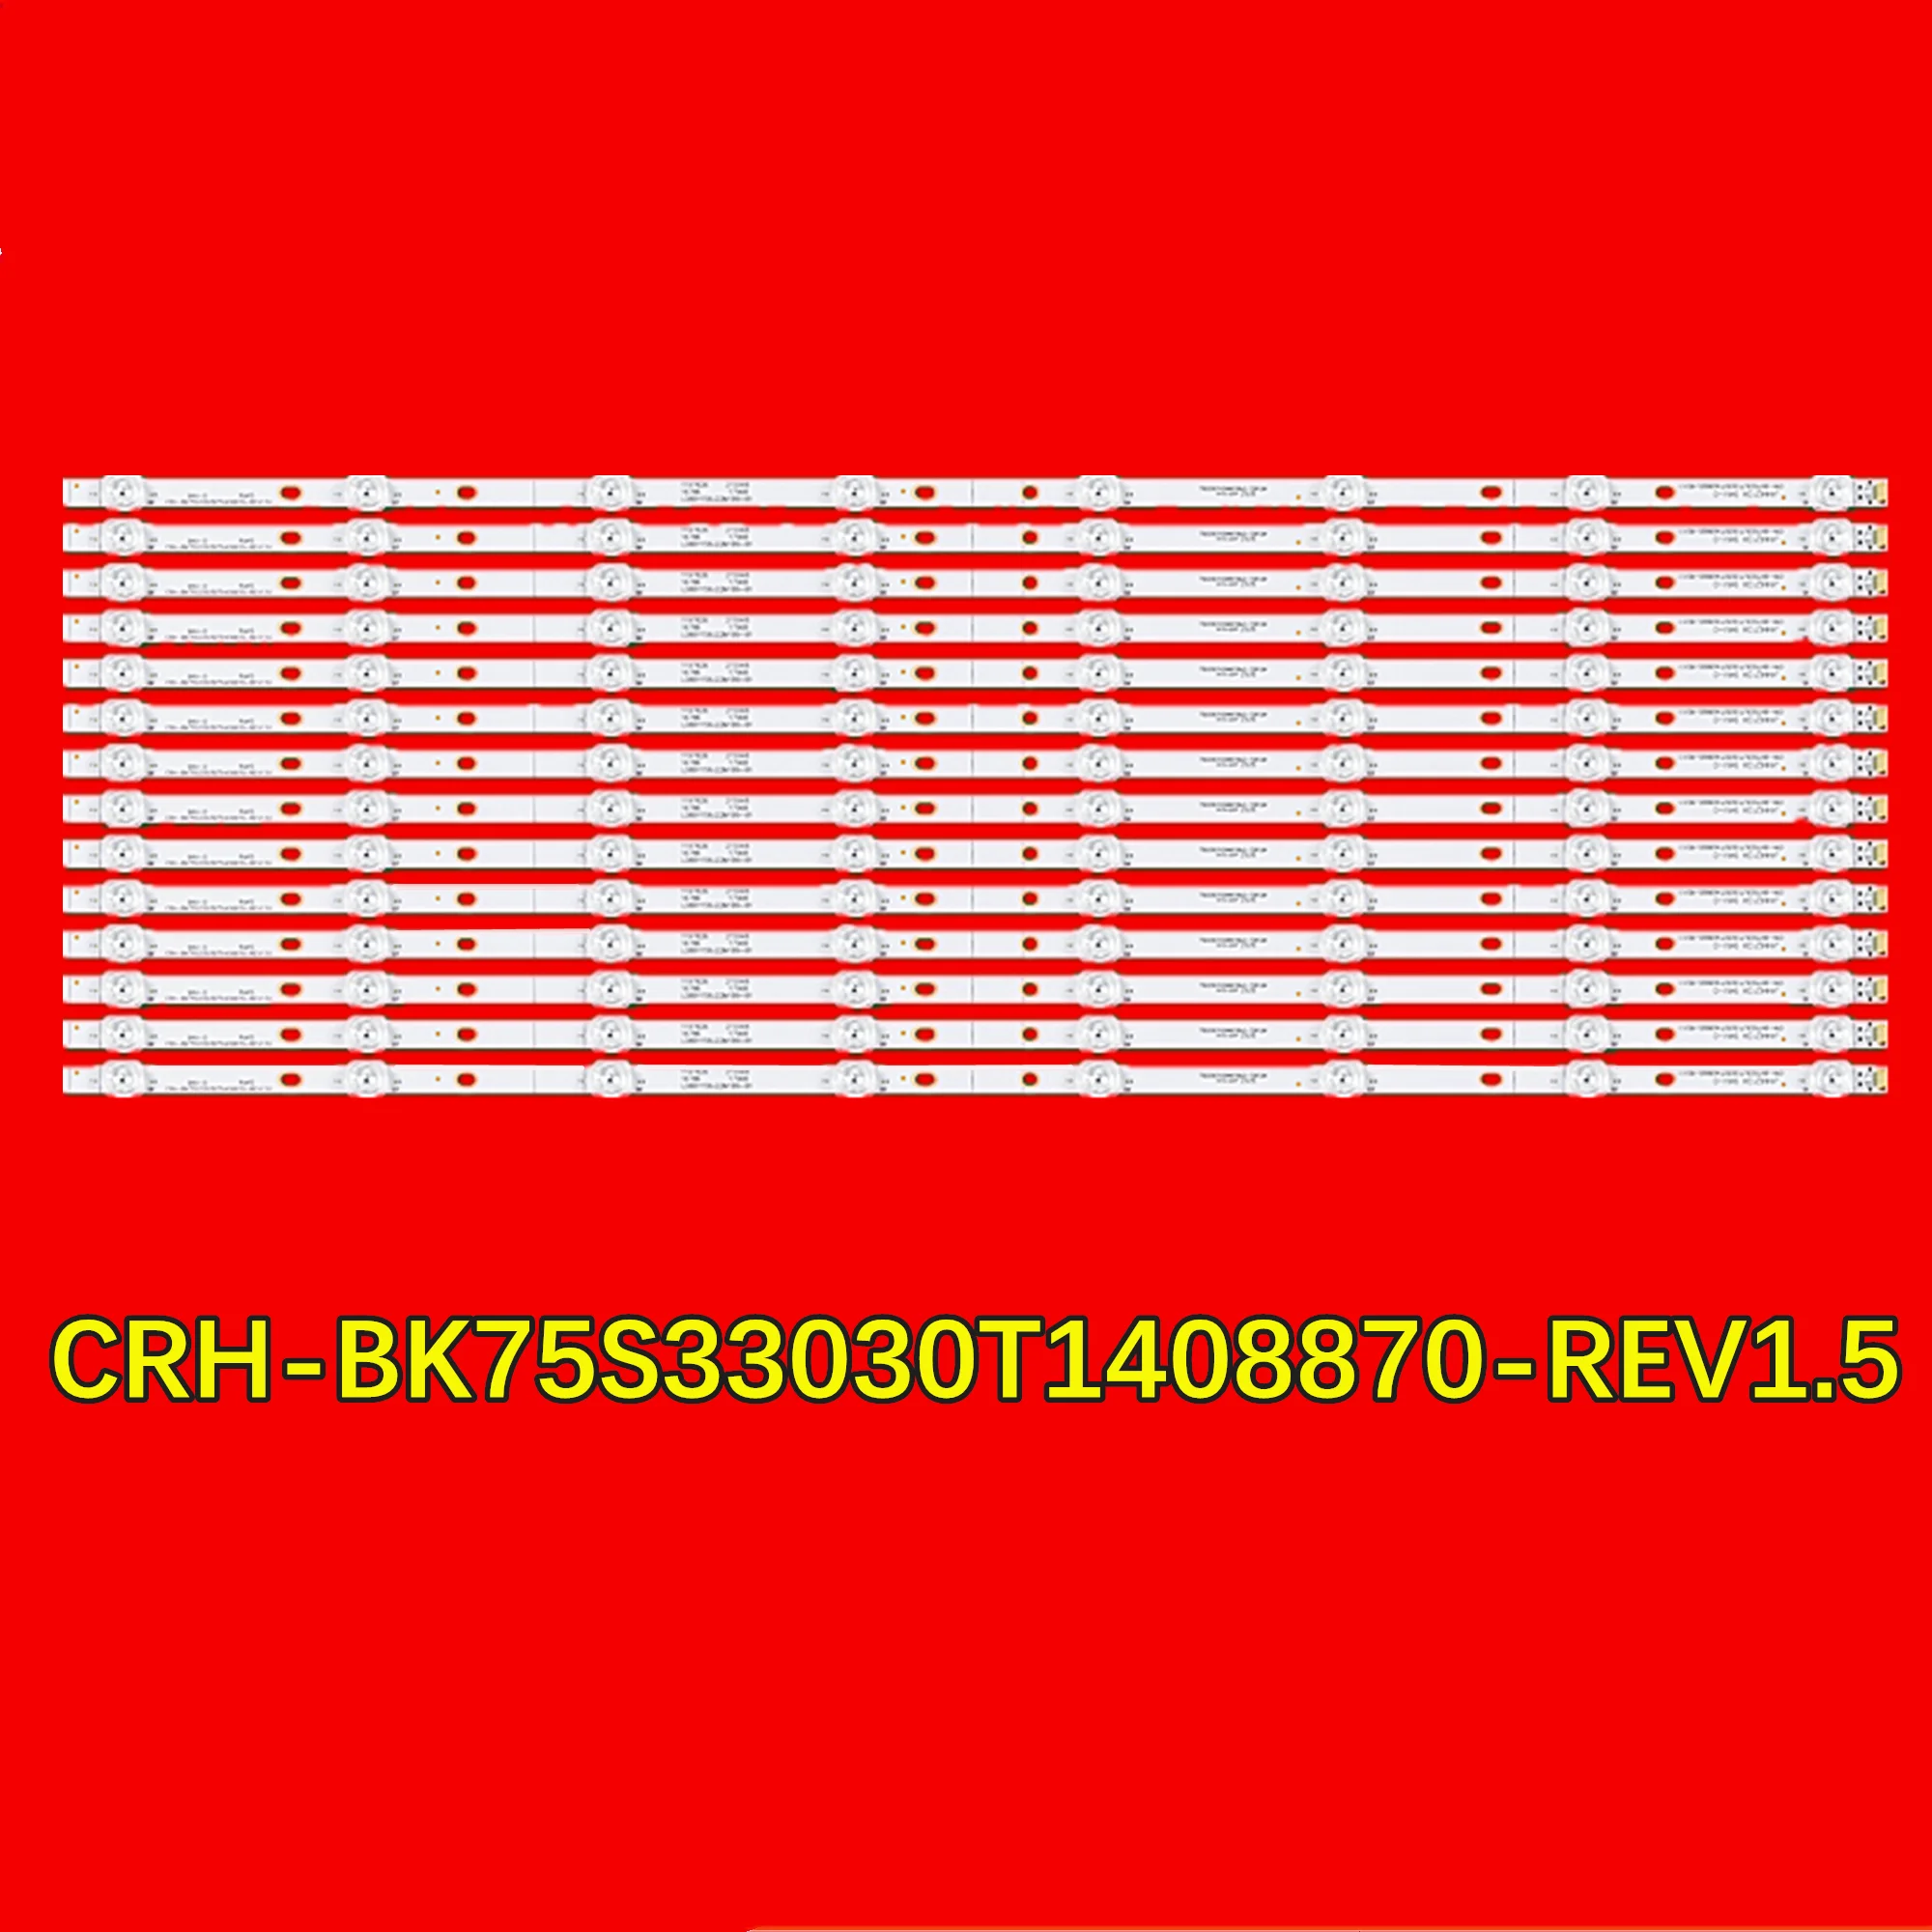 LED TV Ʈ Ʈ, HZ75A65 HZ75E5A 75E3D H75A6500 H75A6500IL 75PFL5603/F7 CRH-BK75S33030T1408870-REV1.5